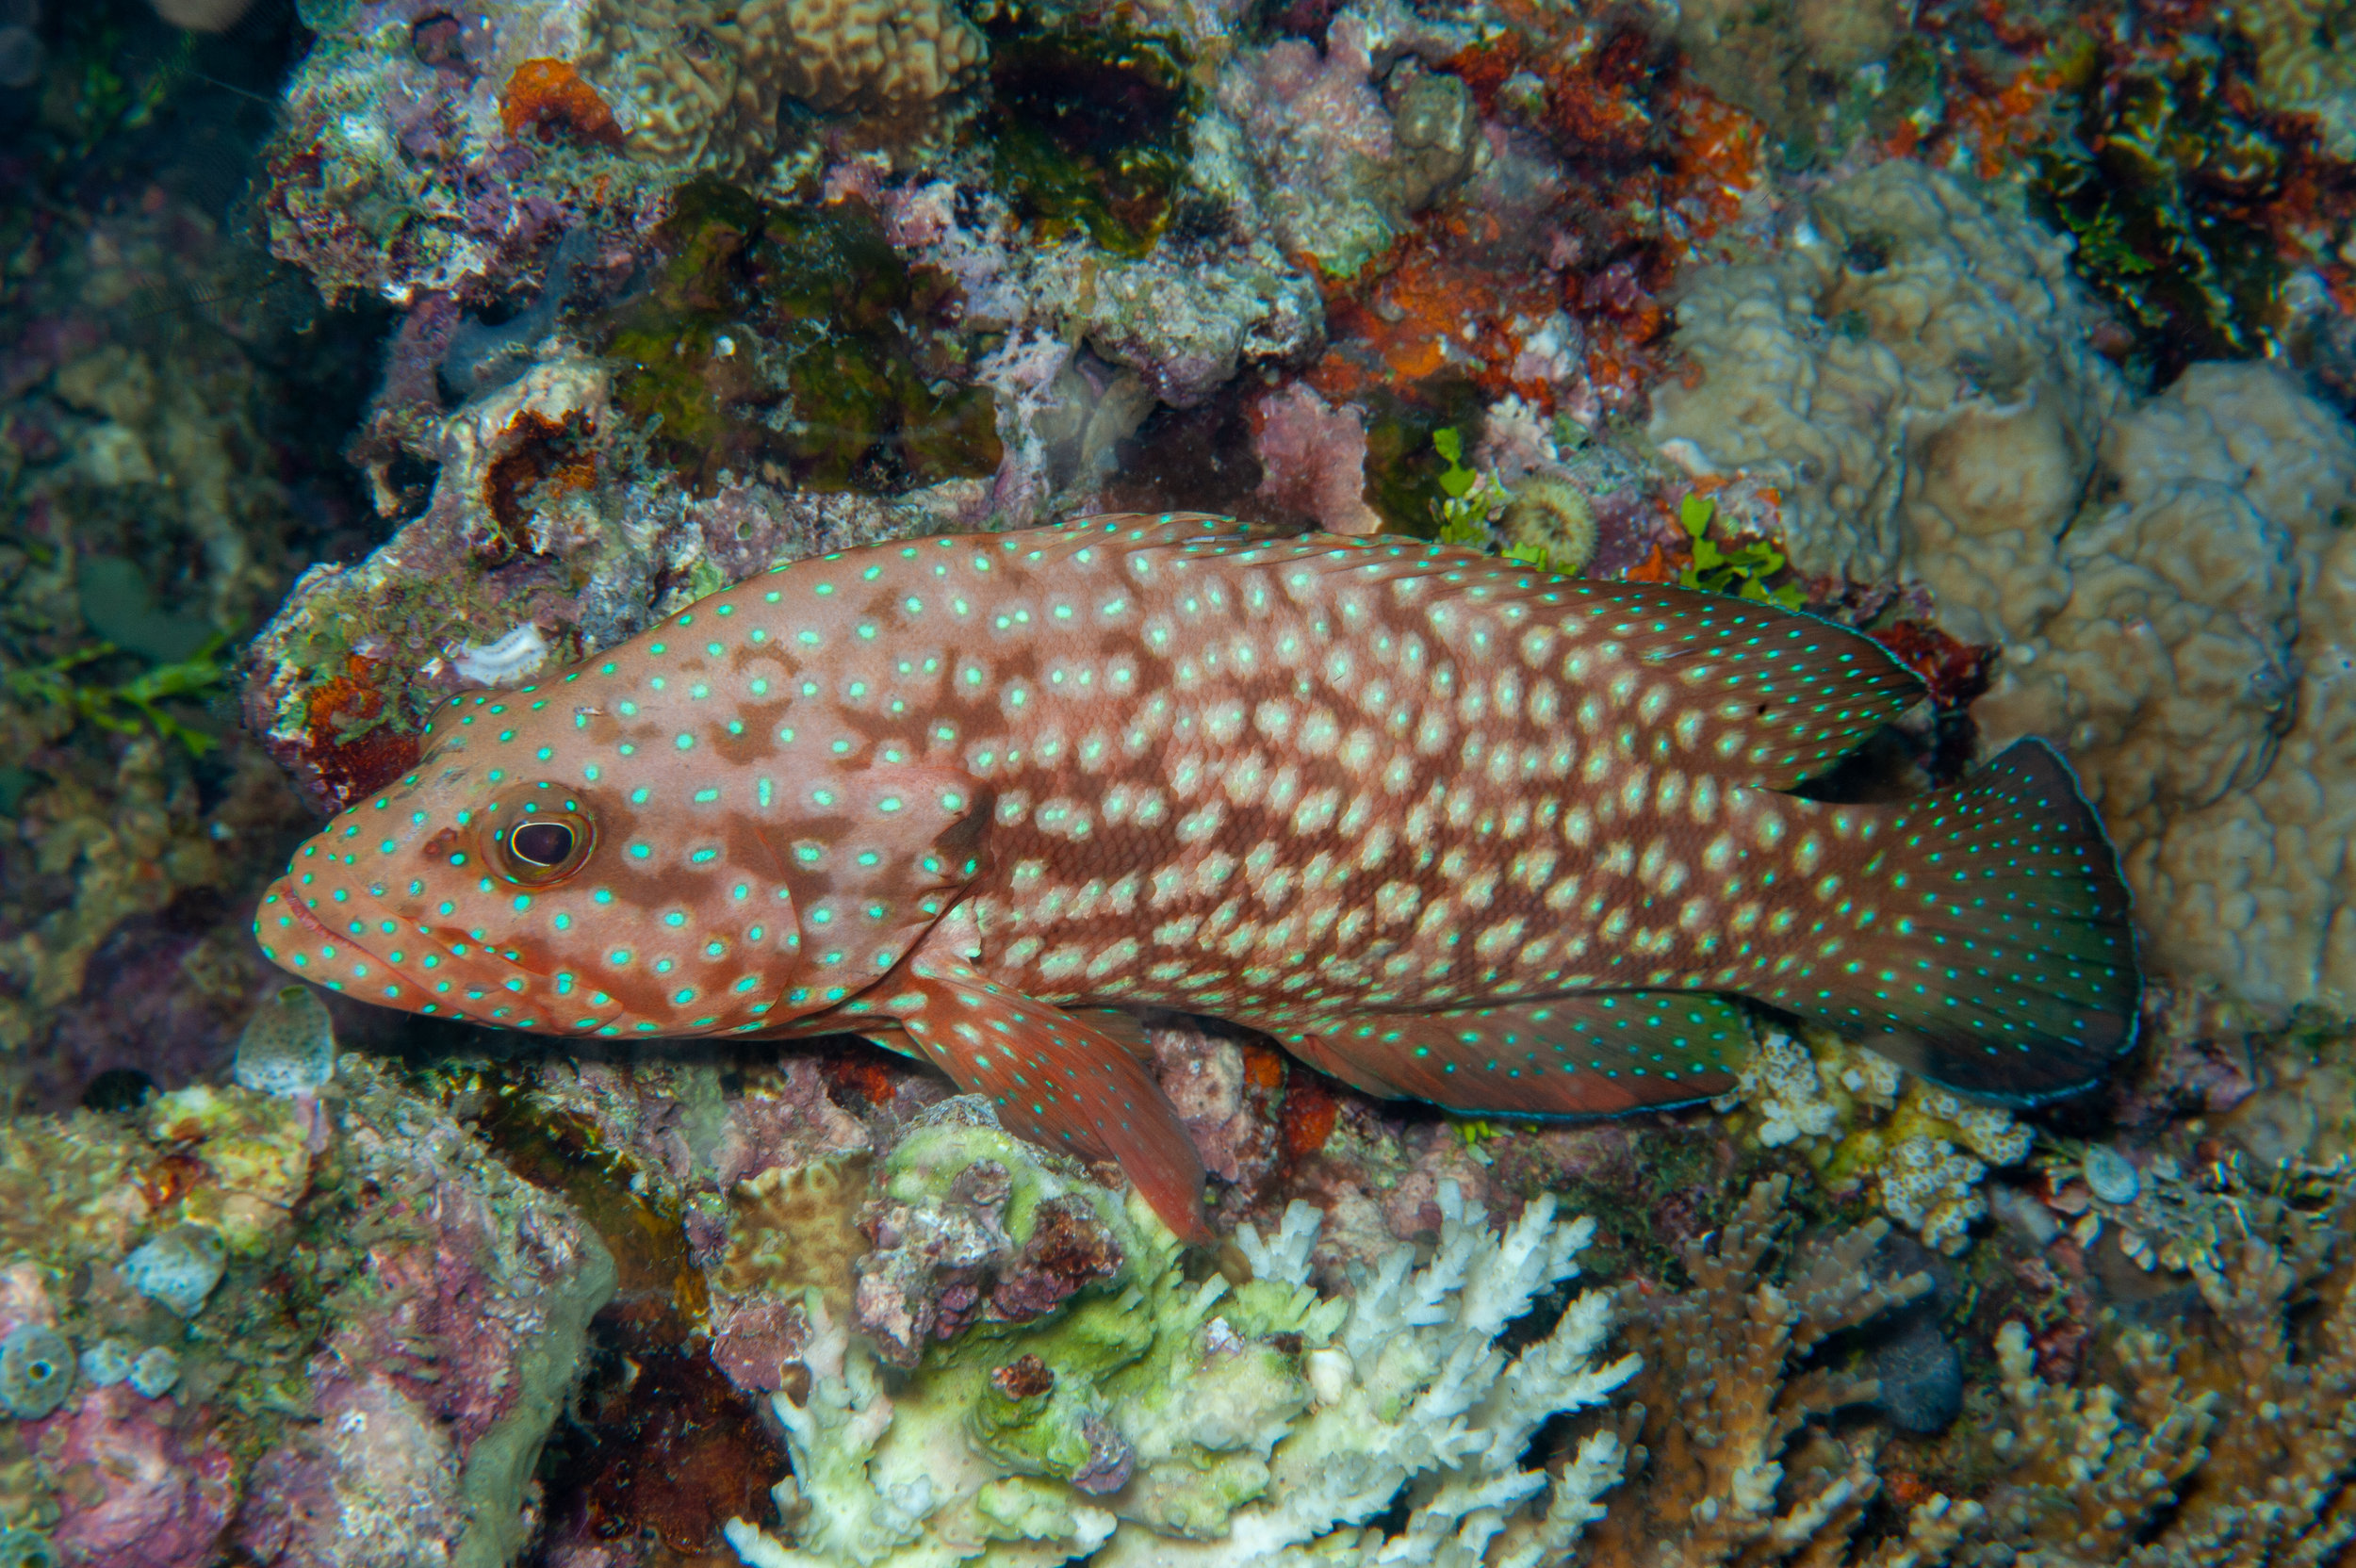 Bluespotted grouper - Cephalopholis cyanostigma, Ake's Reef, Father's Reefs